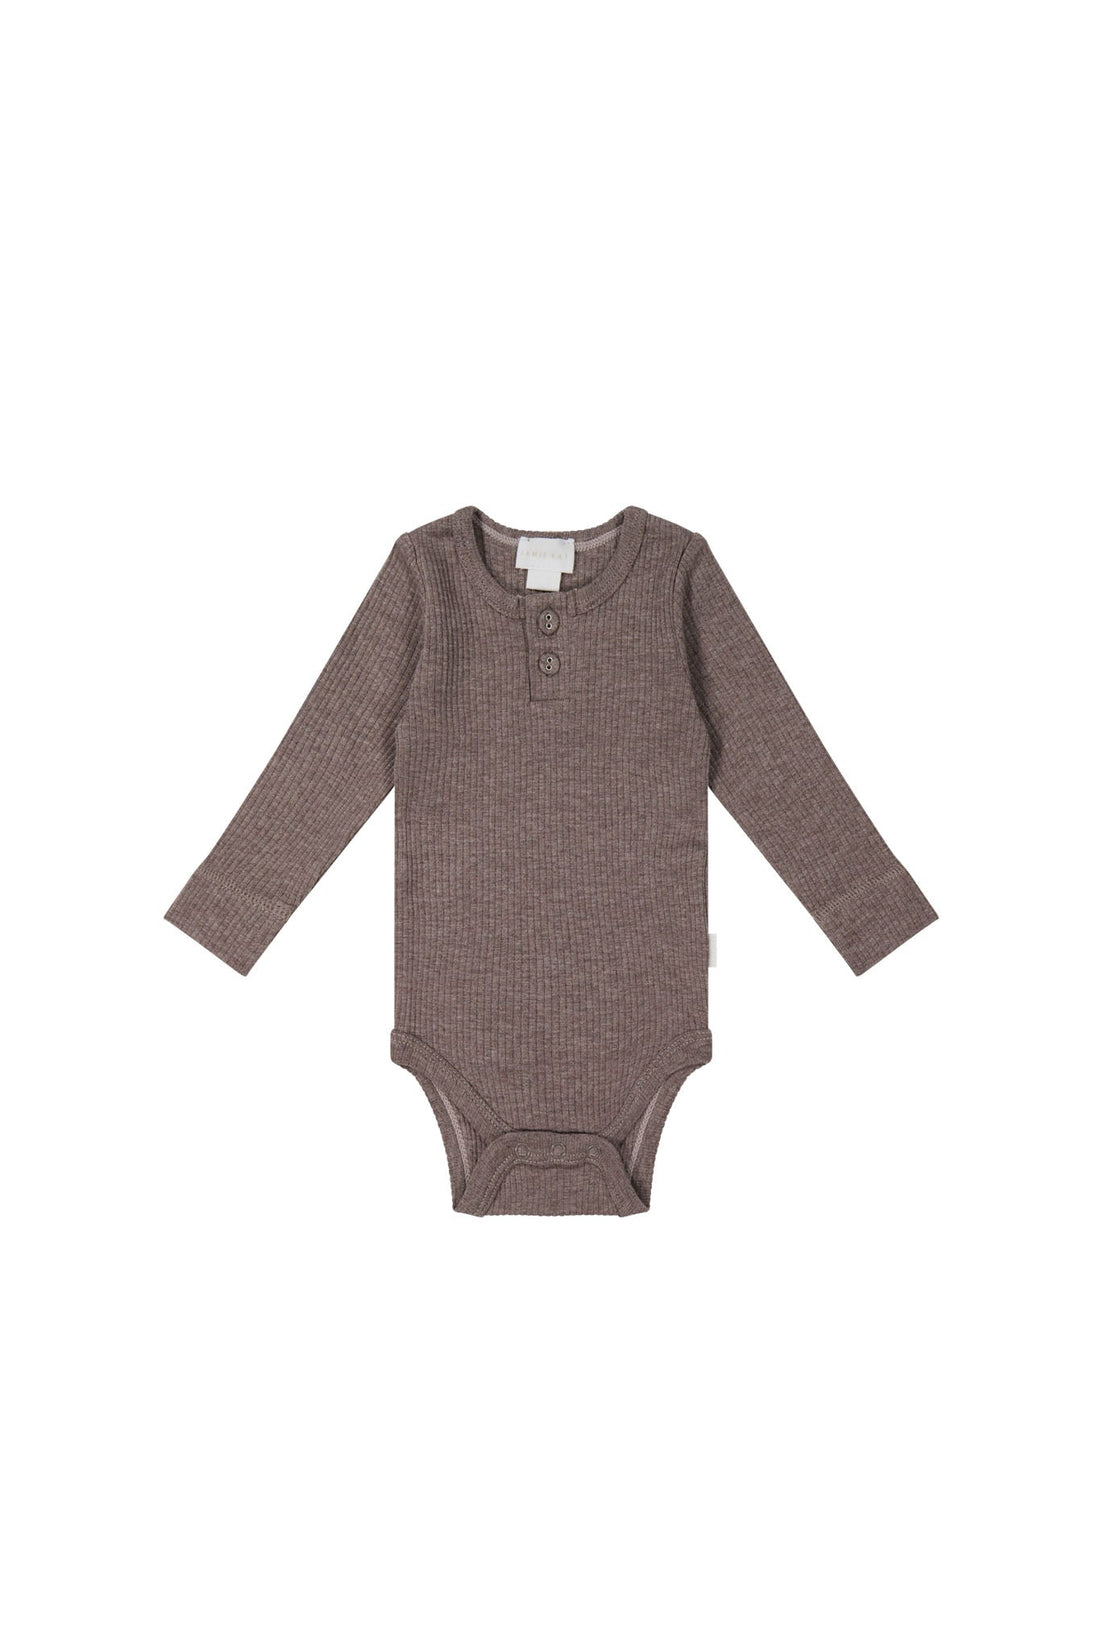 Organic Cotton Modal Long Sleeve Bodysuit - Truffle Marle Childrens Bodysuit from Jamie Kay USA